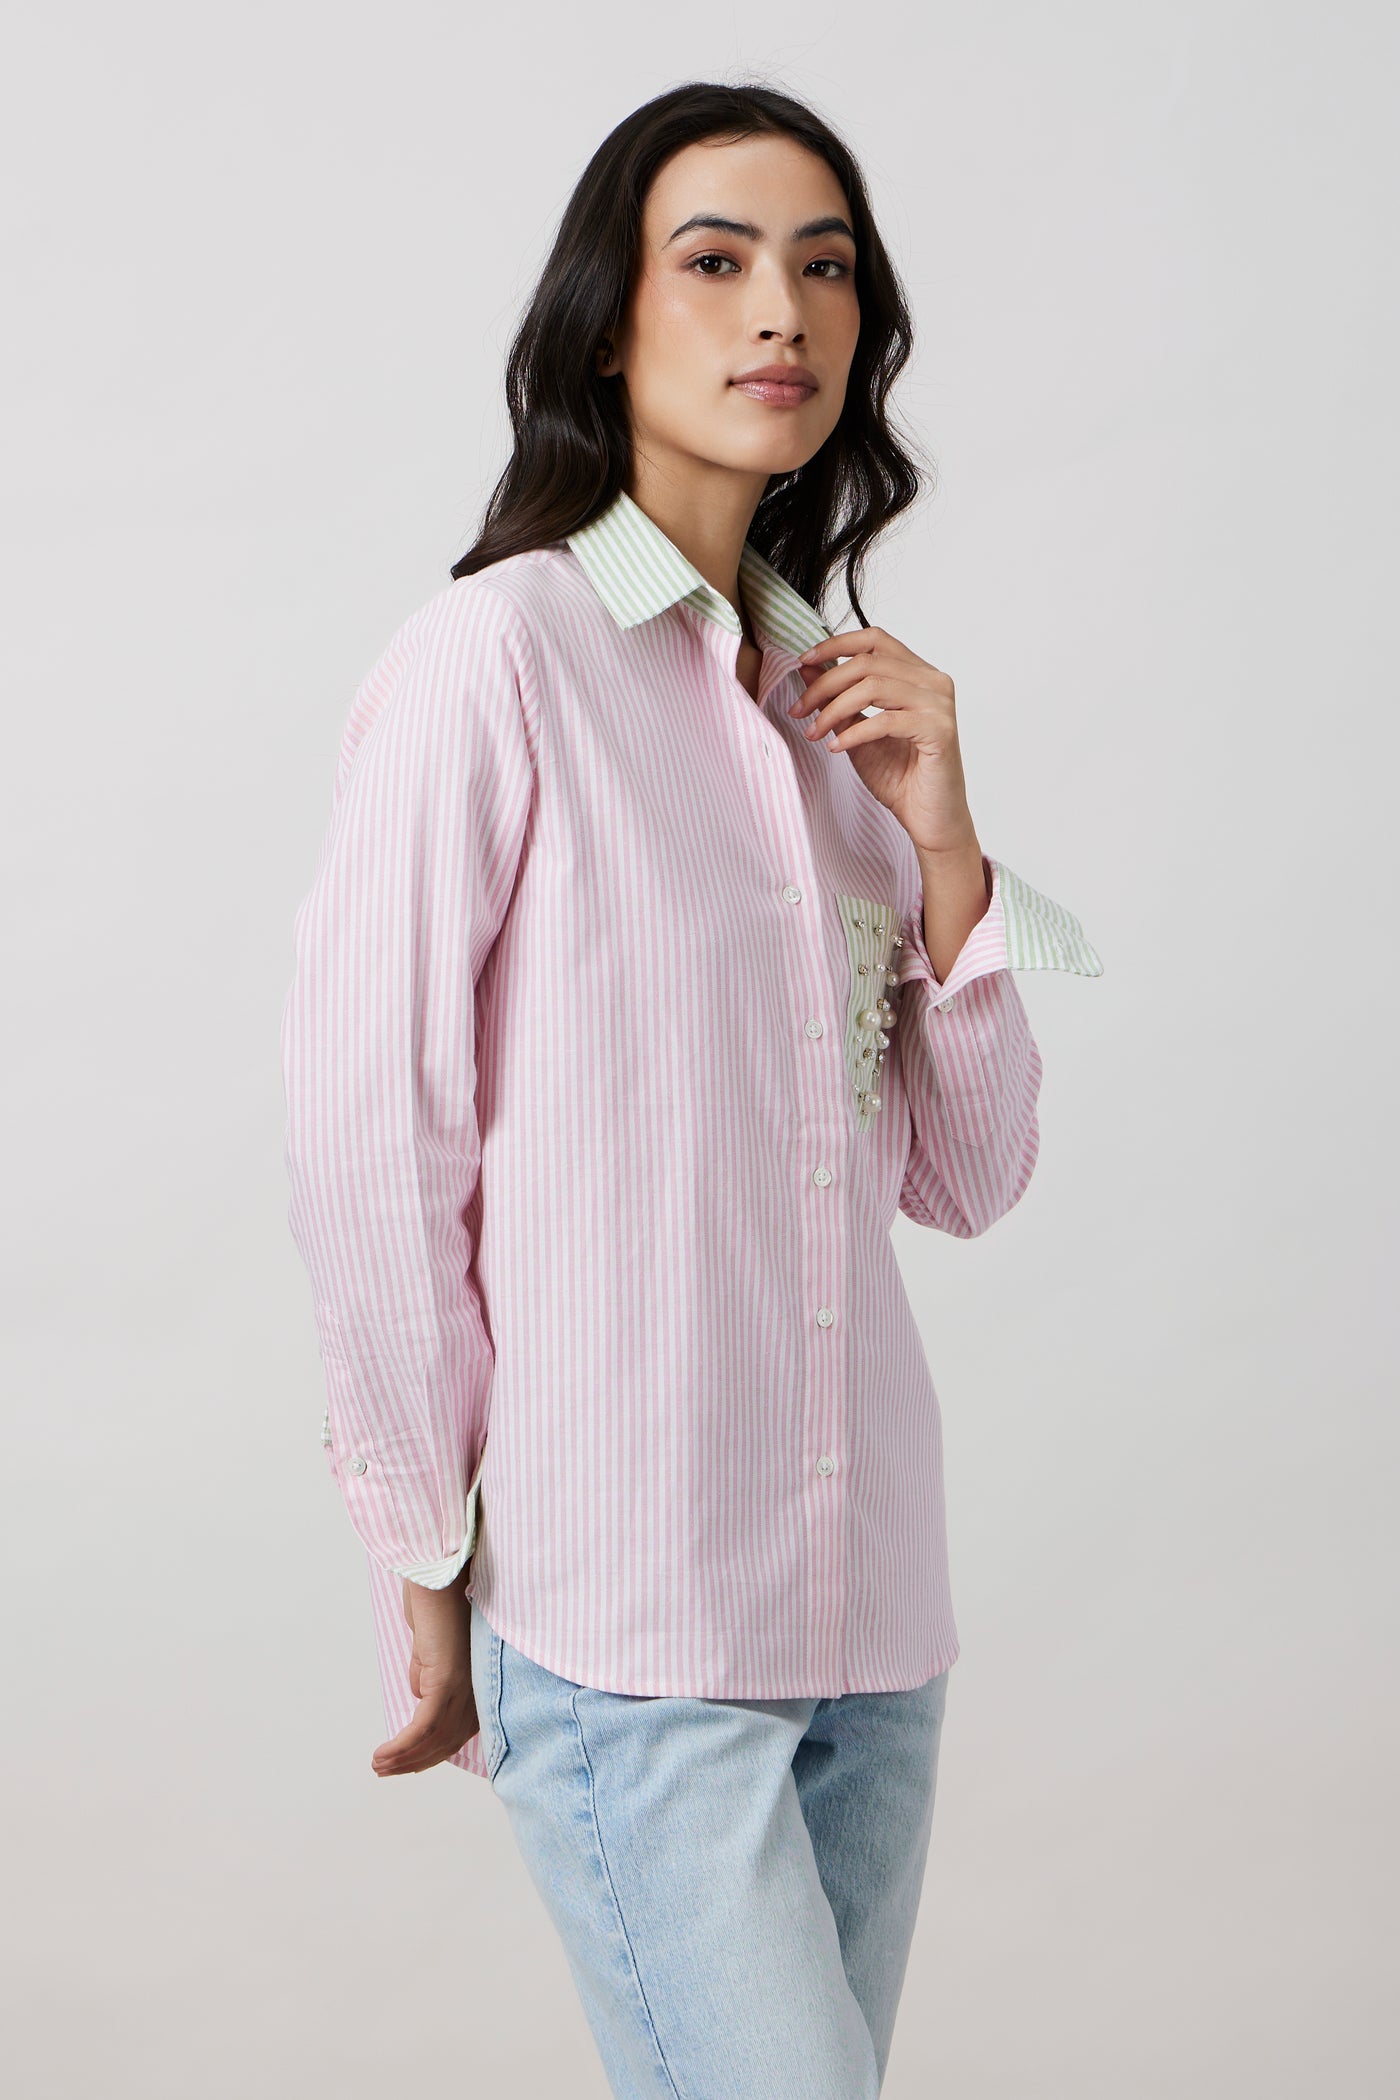 Pink Pastel Stripes Shirt with Swarovski Pearl Pocket